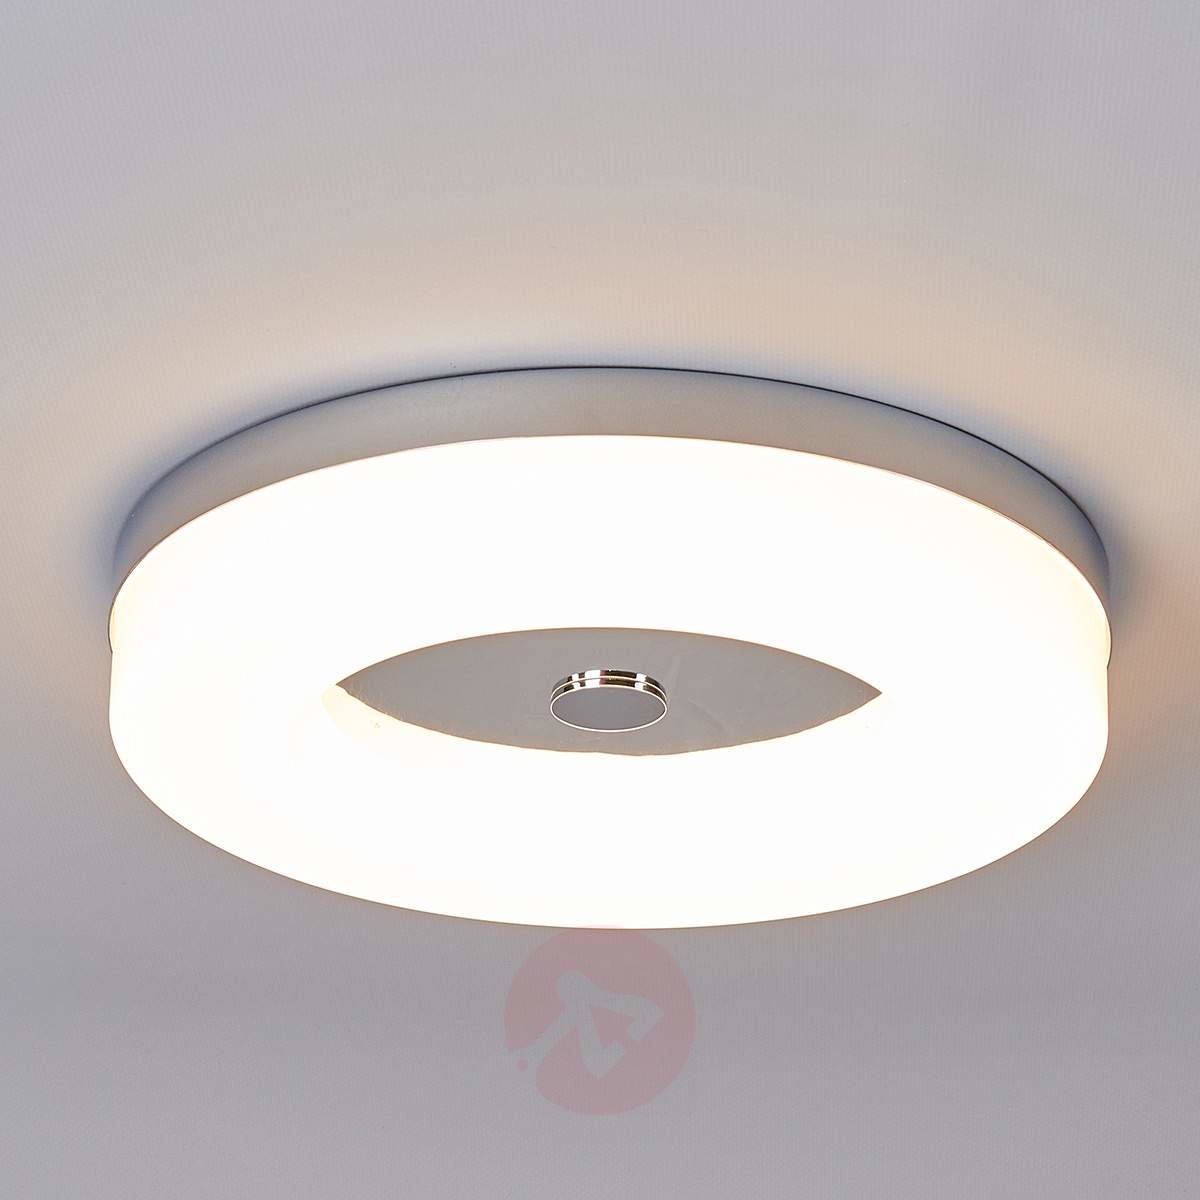 Lampenwelt Lampa sufitowa LED SHANIA w kszt. pierścienia